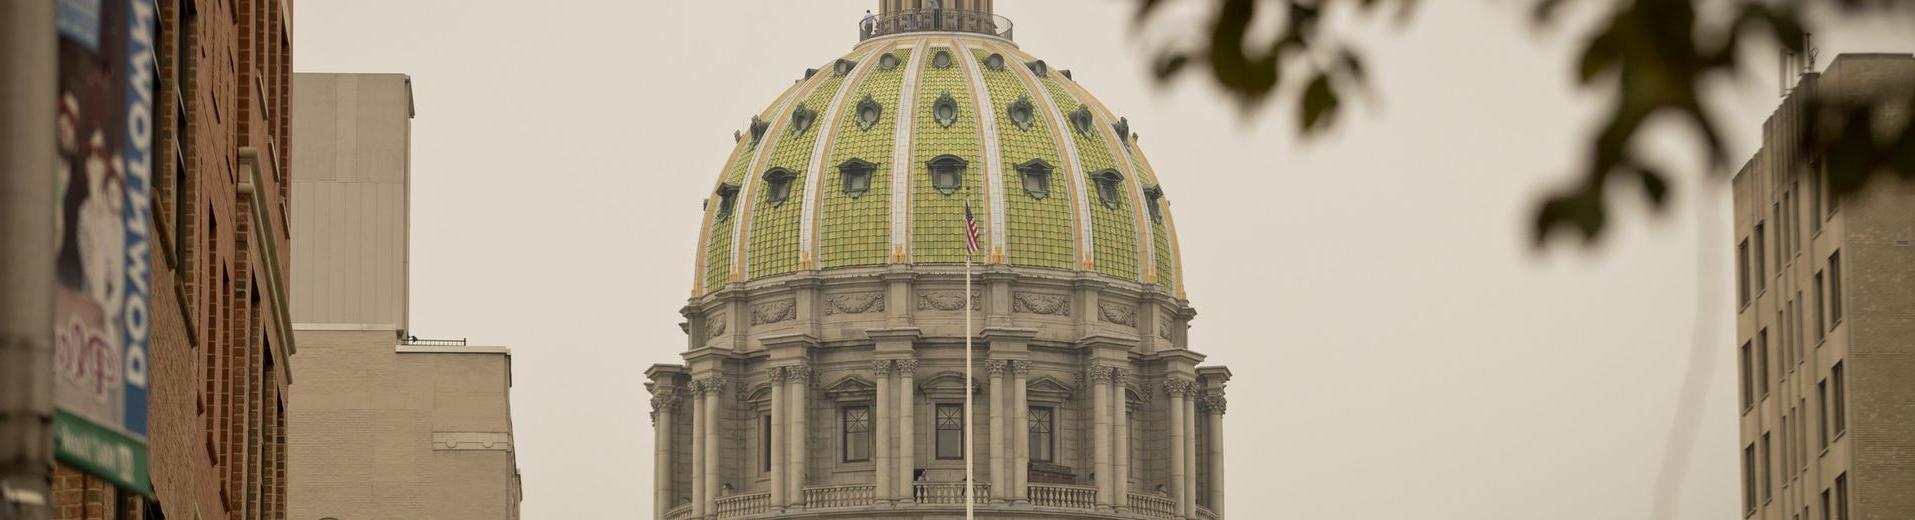 The Pennsylvania capitol building dome in Harrisburg.